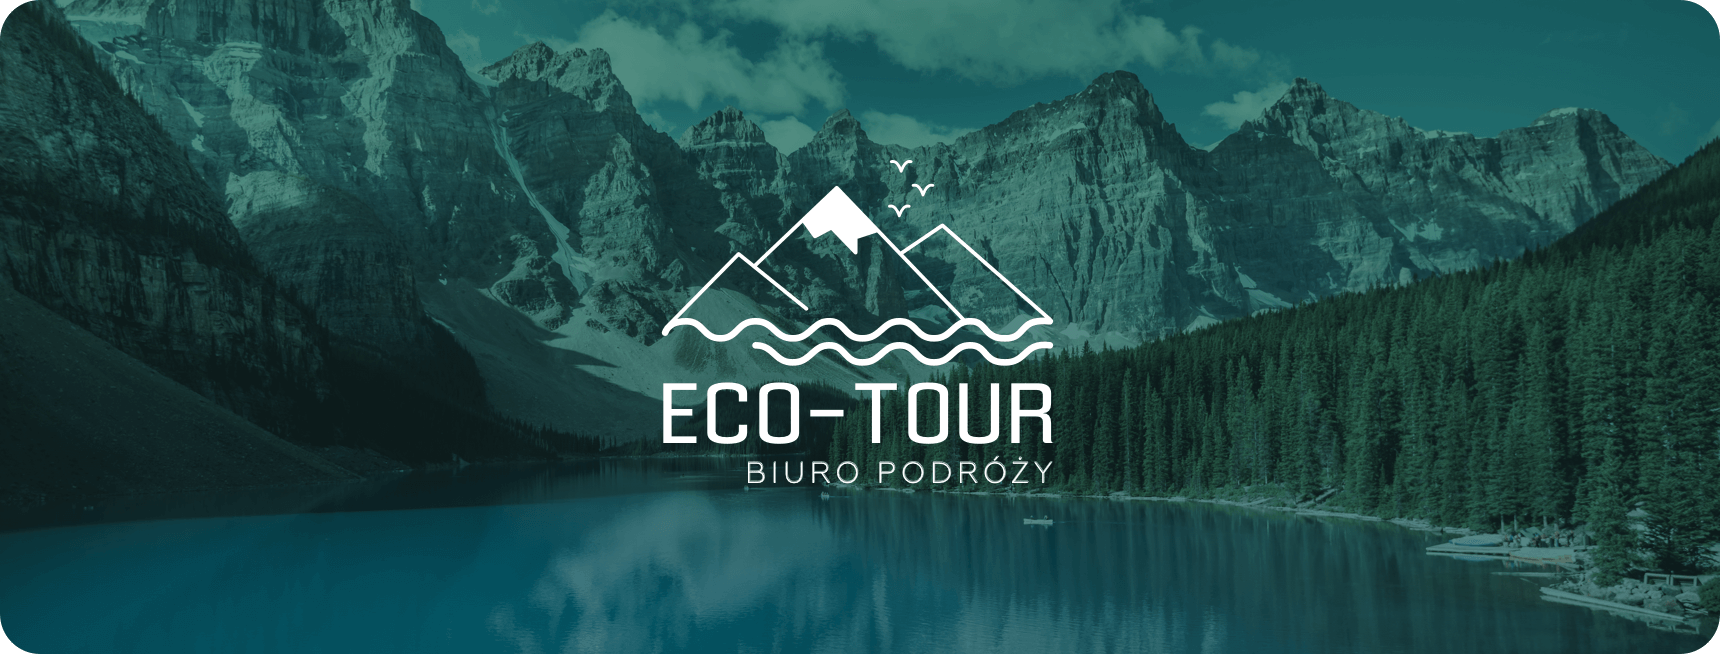 Eco-Tour